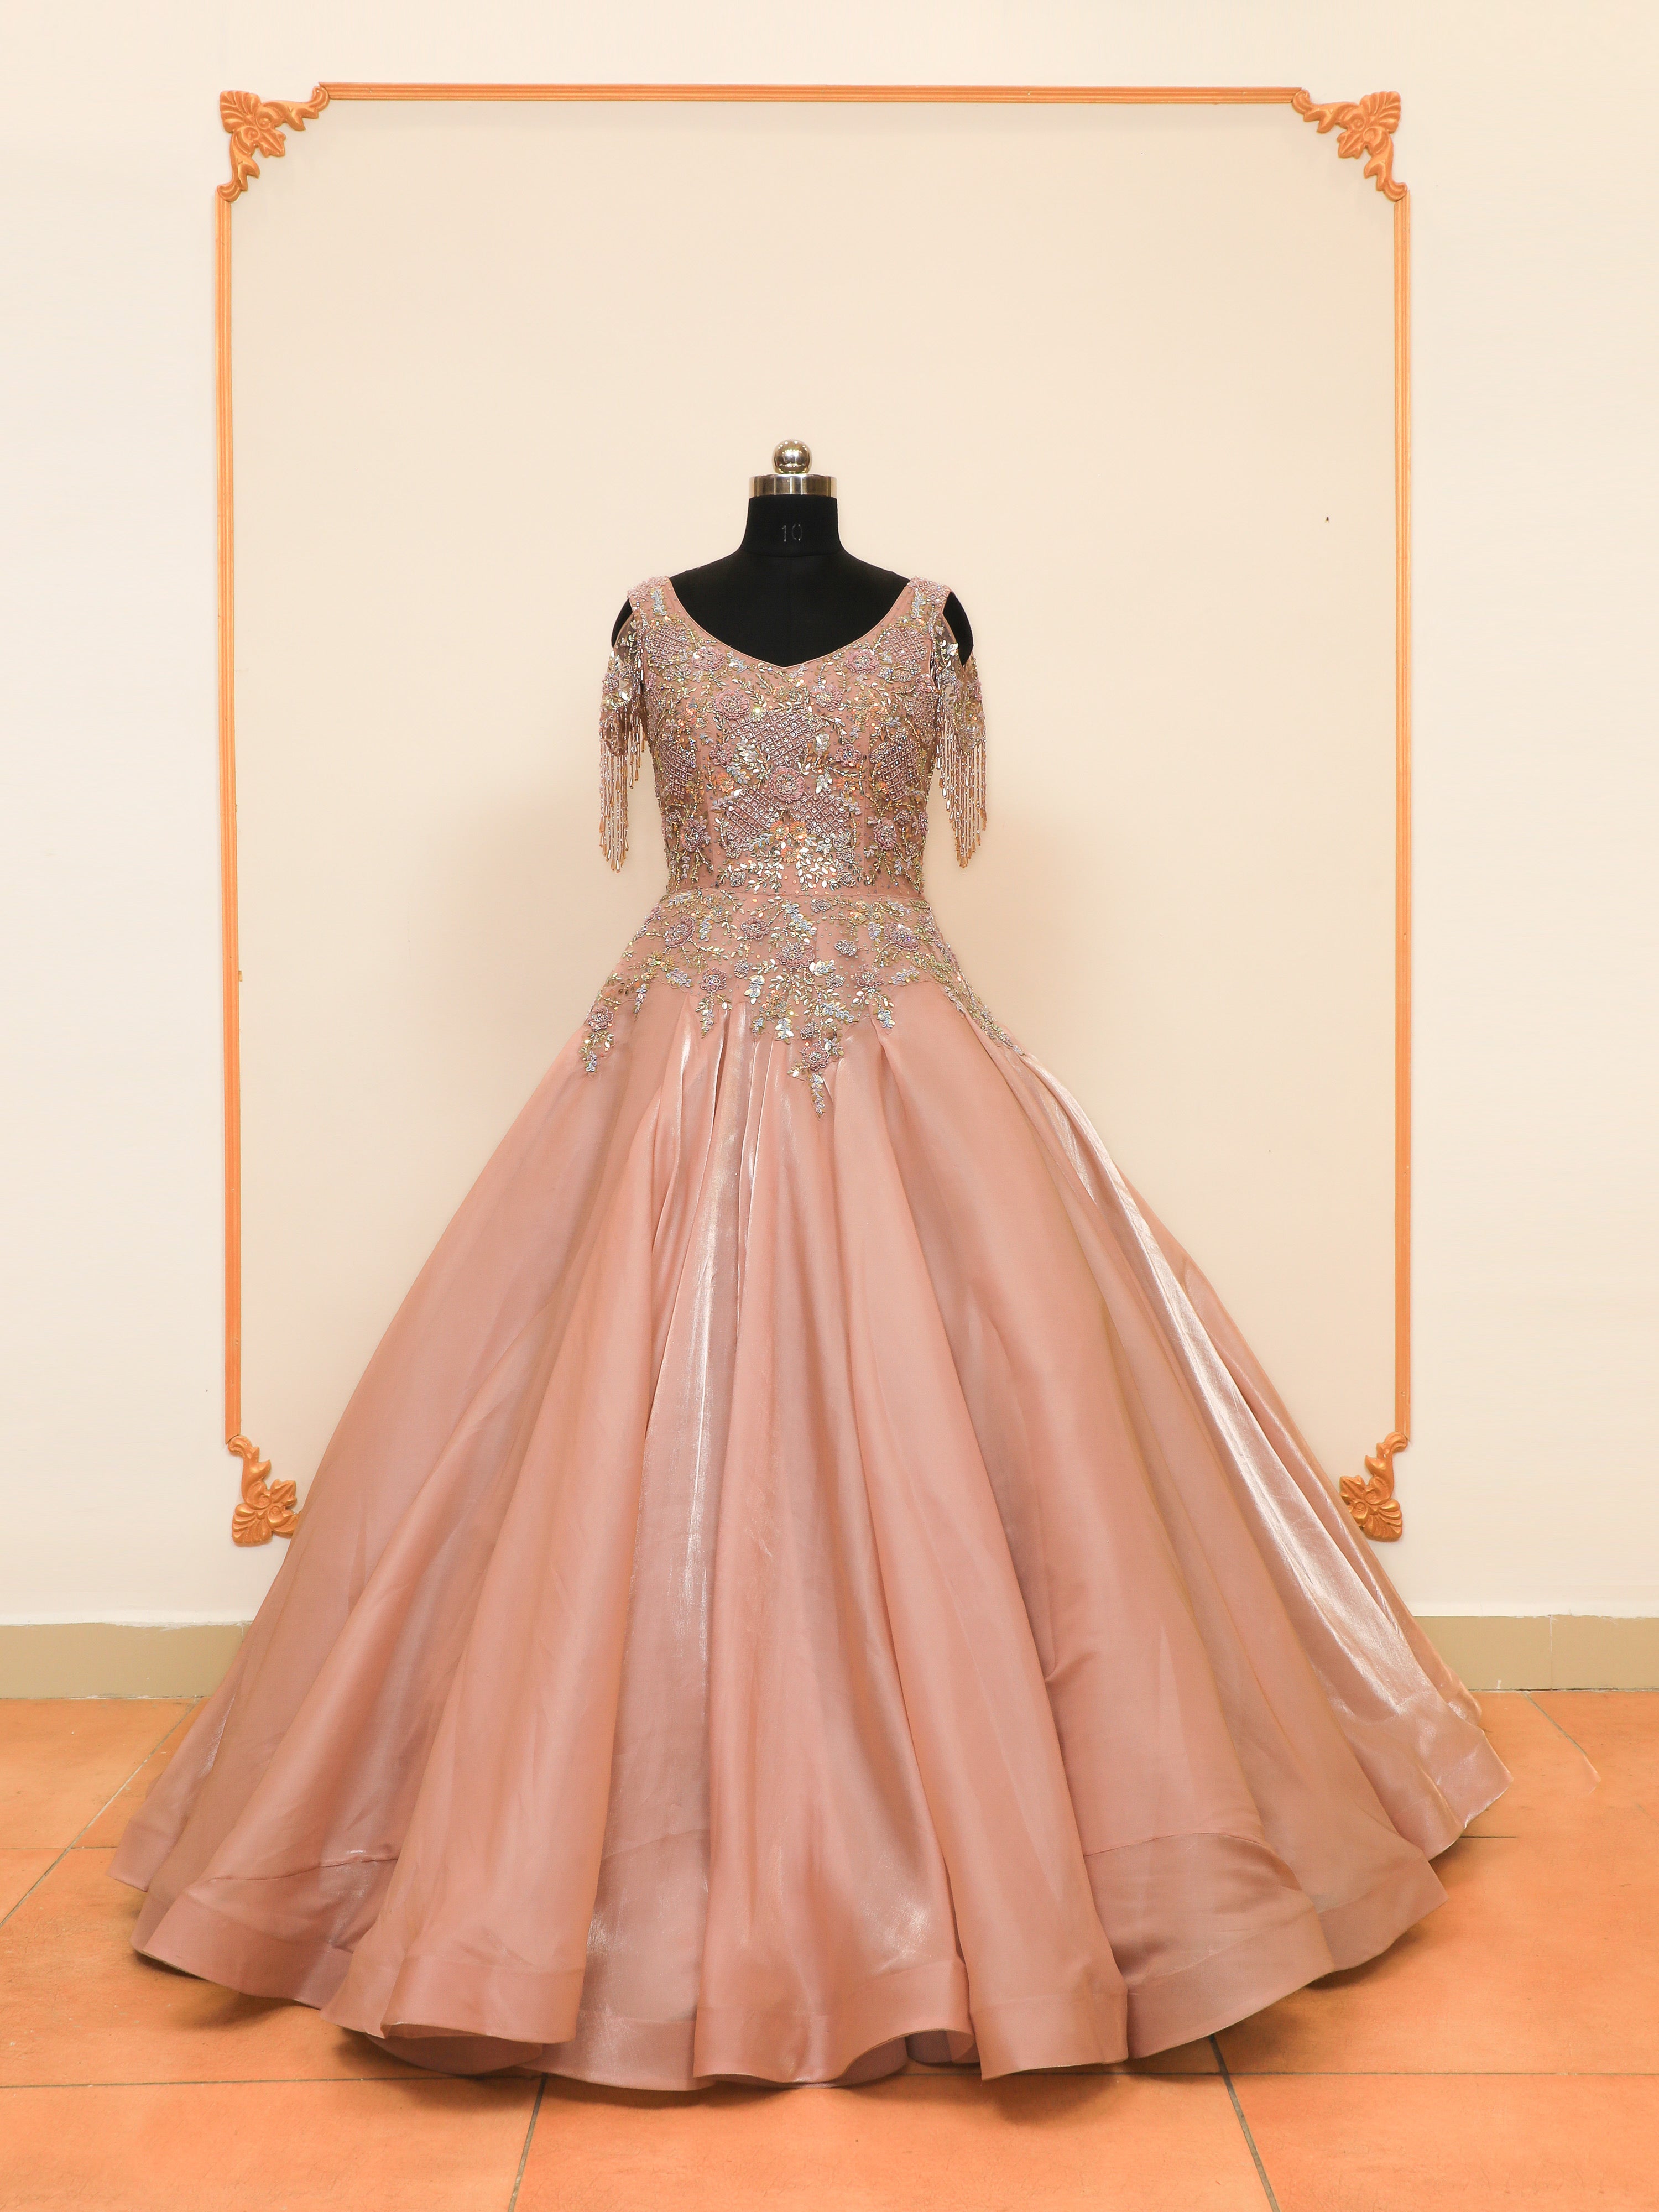 Bridal Dress Manufacturers & Suppliers - Latest Bridal Dress Designs